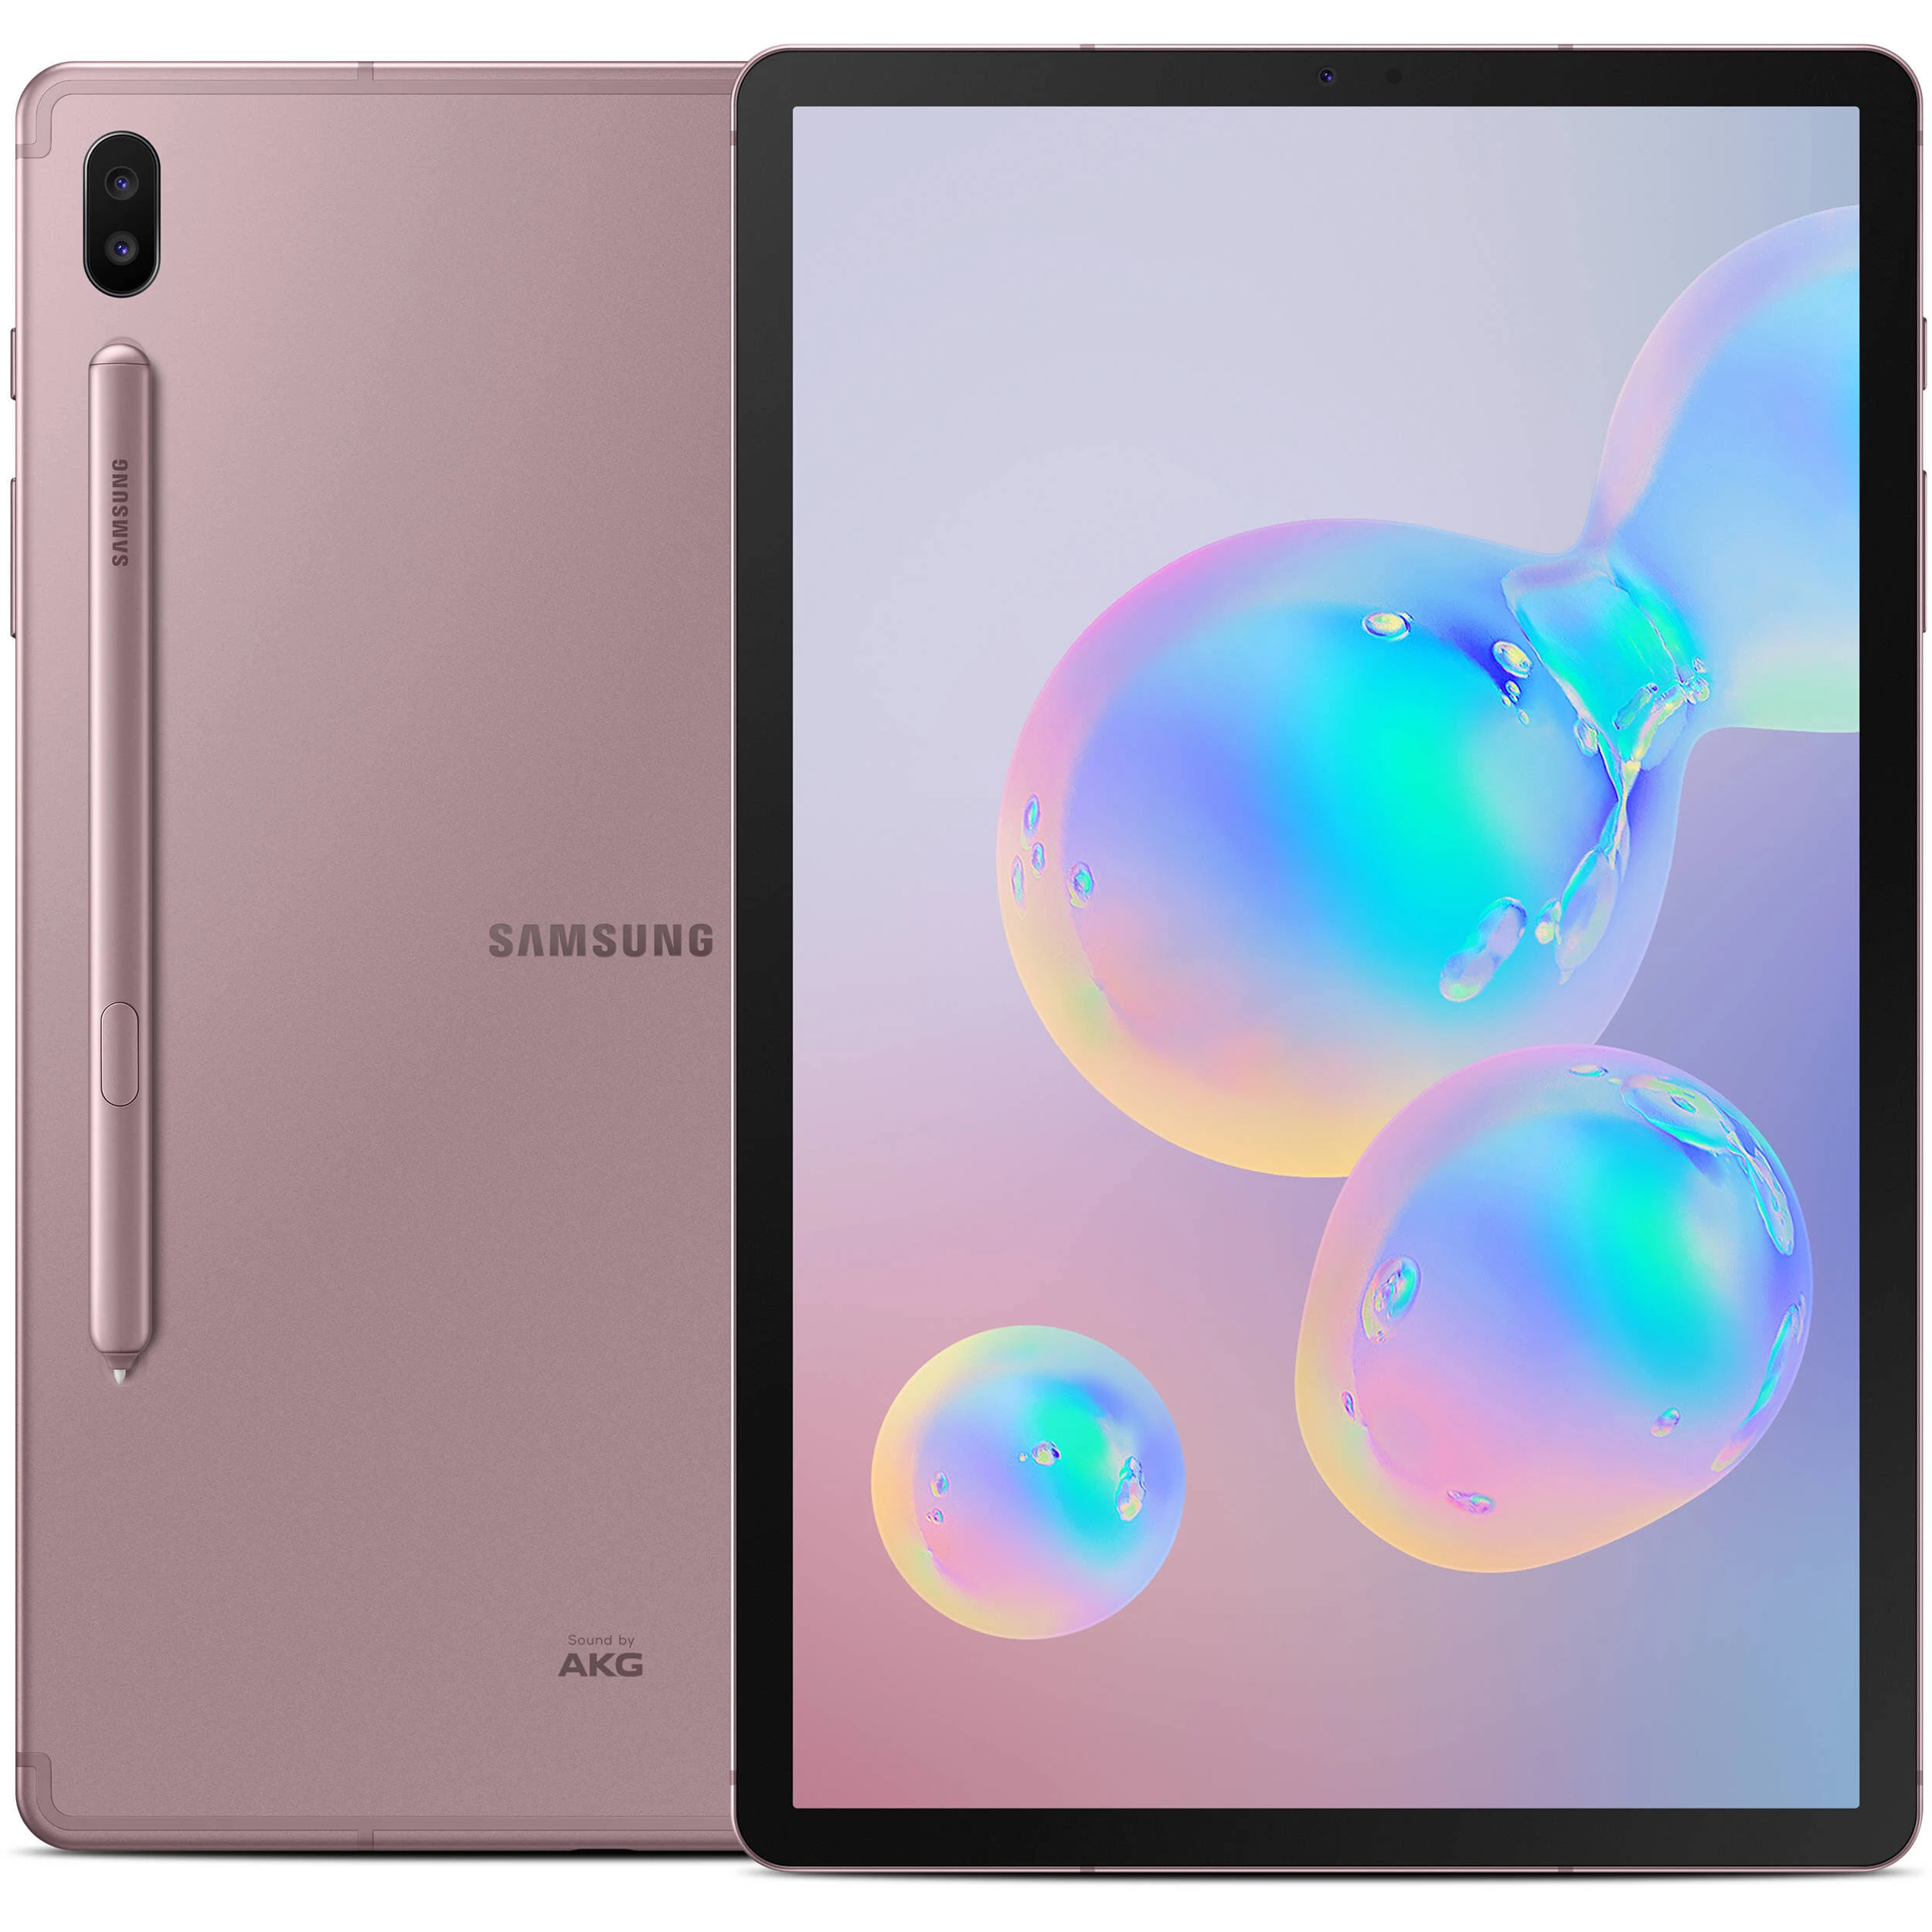 Samsung 10.5 inch Galaxy Tab S6 256 GB Android 9.0 Pie Wi-Fi Rose Blush SM-T860NZNLXAR